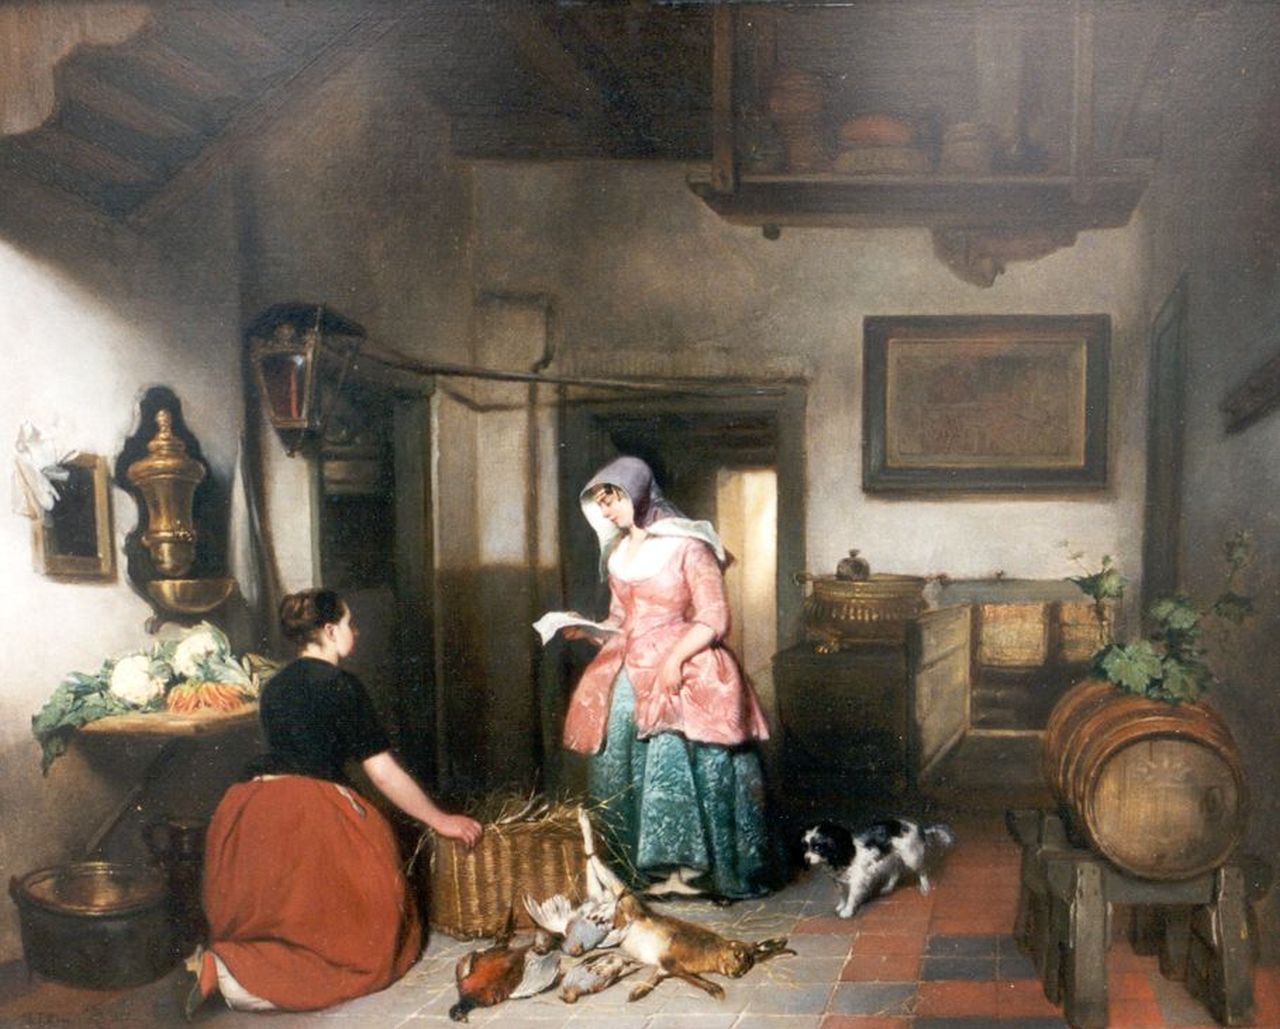 Hove H. van | Hubertus 'Huib' van Hove, Interieur met vrouw  die brief voorleest, olieverf op paneel 44,2 x 56,0 cm, gesigneerd linksonder en gedateerd 1852